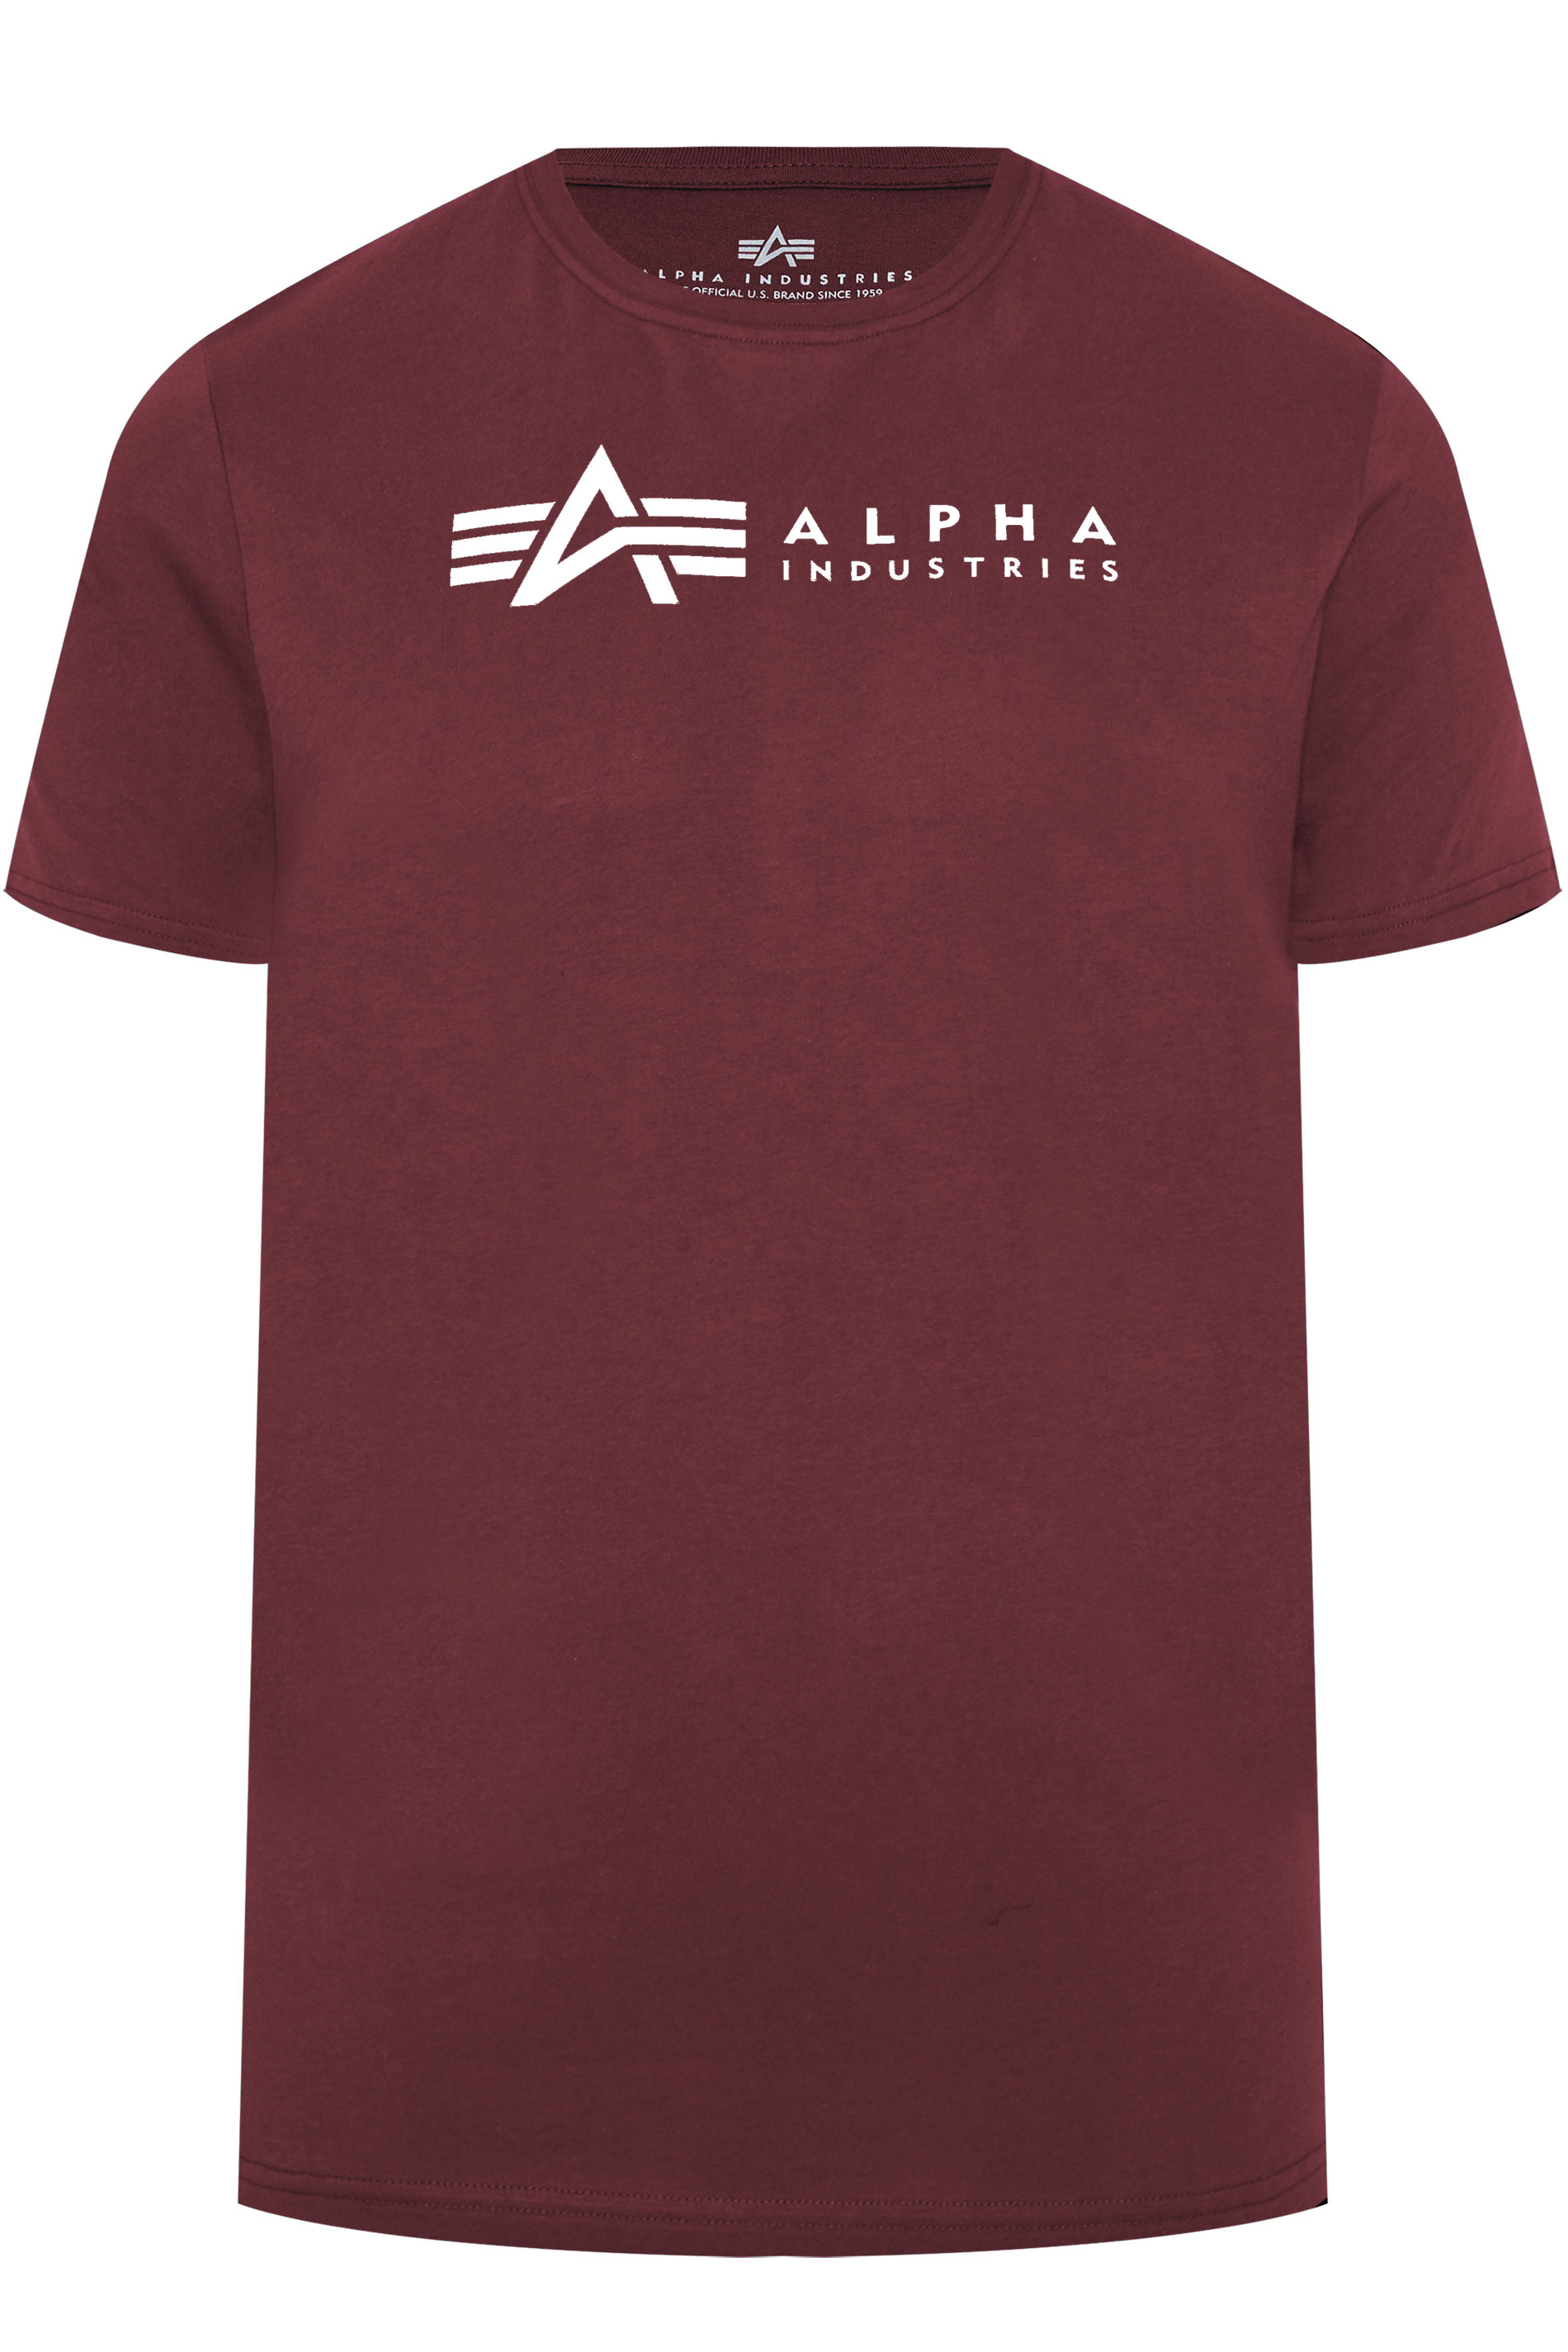 ALPHA INDUSTRIES Burgundy Red 2 Pack Logo T-Shirts | BadRhino